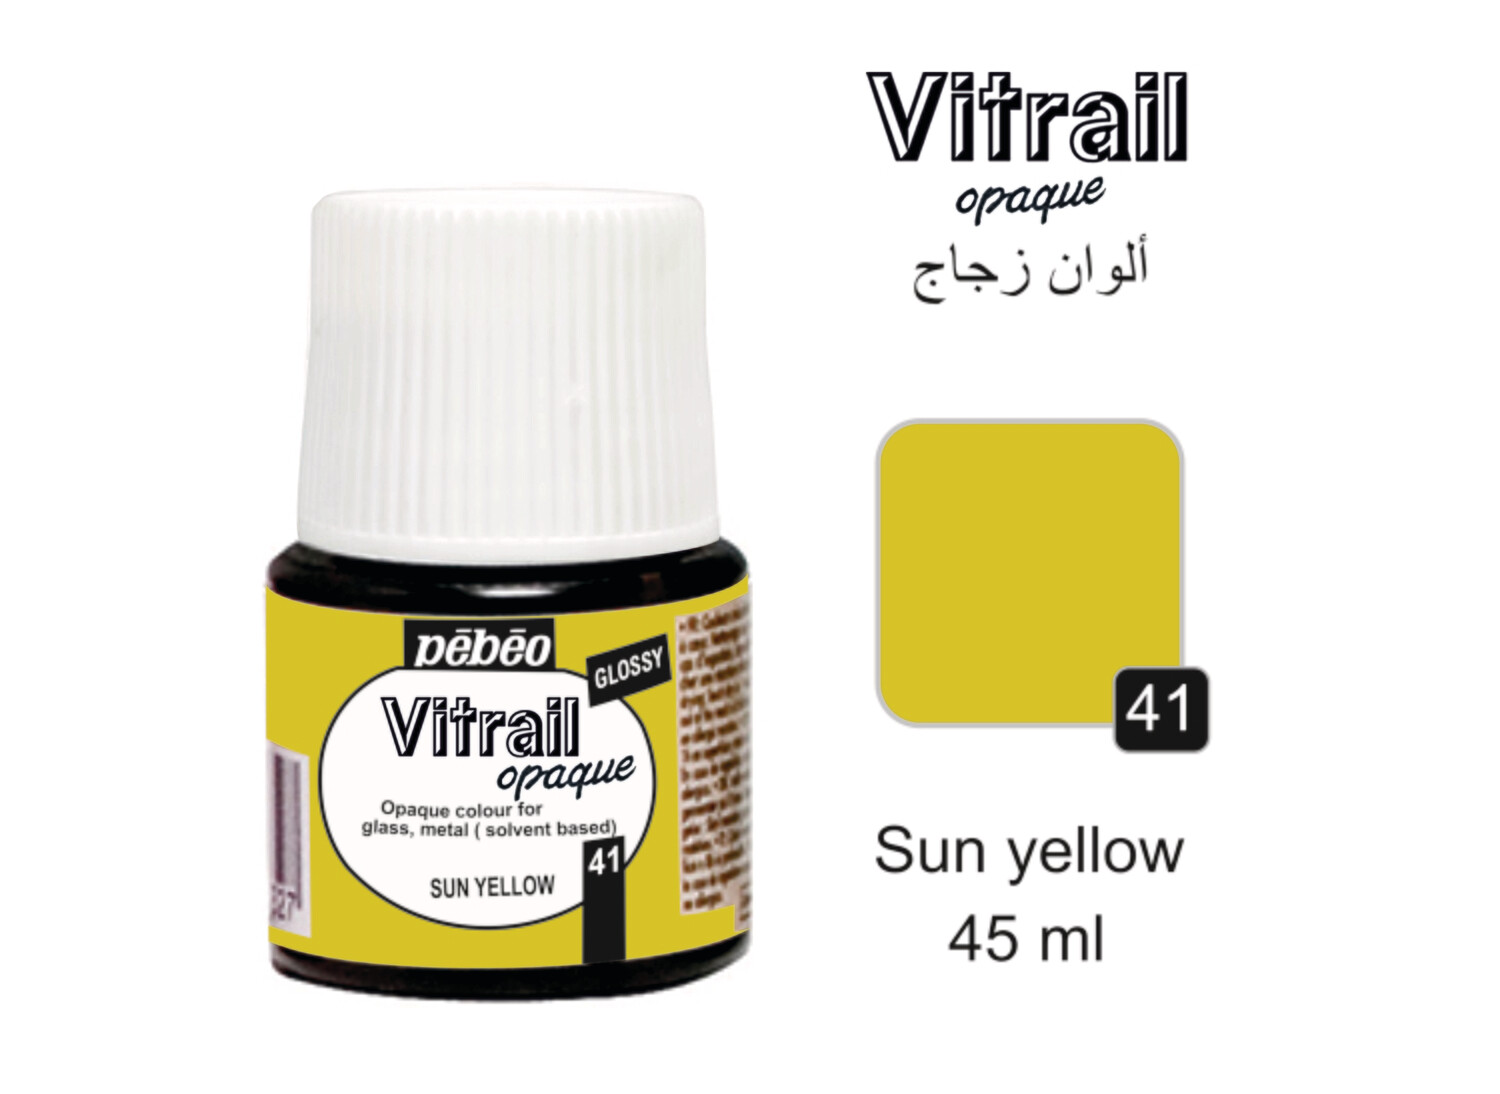 VITRAIL glass colors Sun yellow No. 41, 45 ml, Opaque